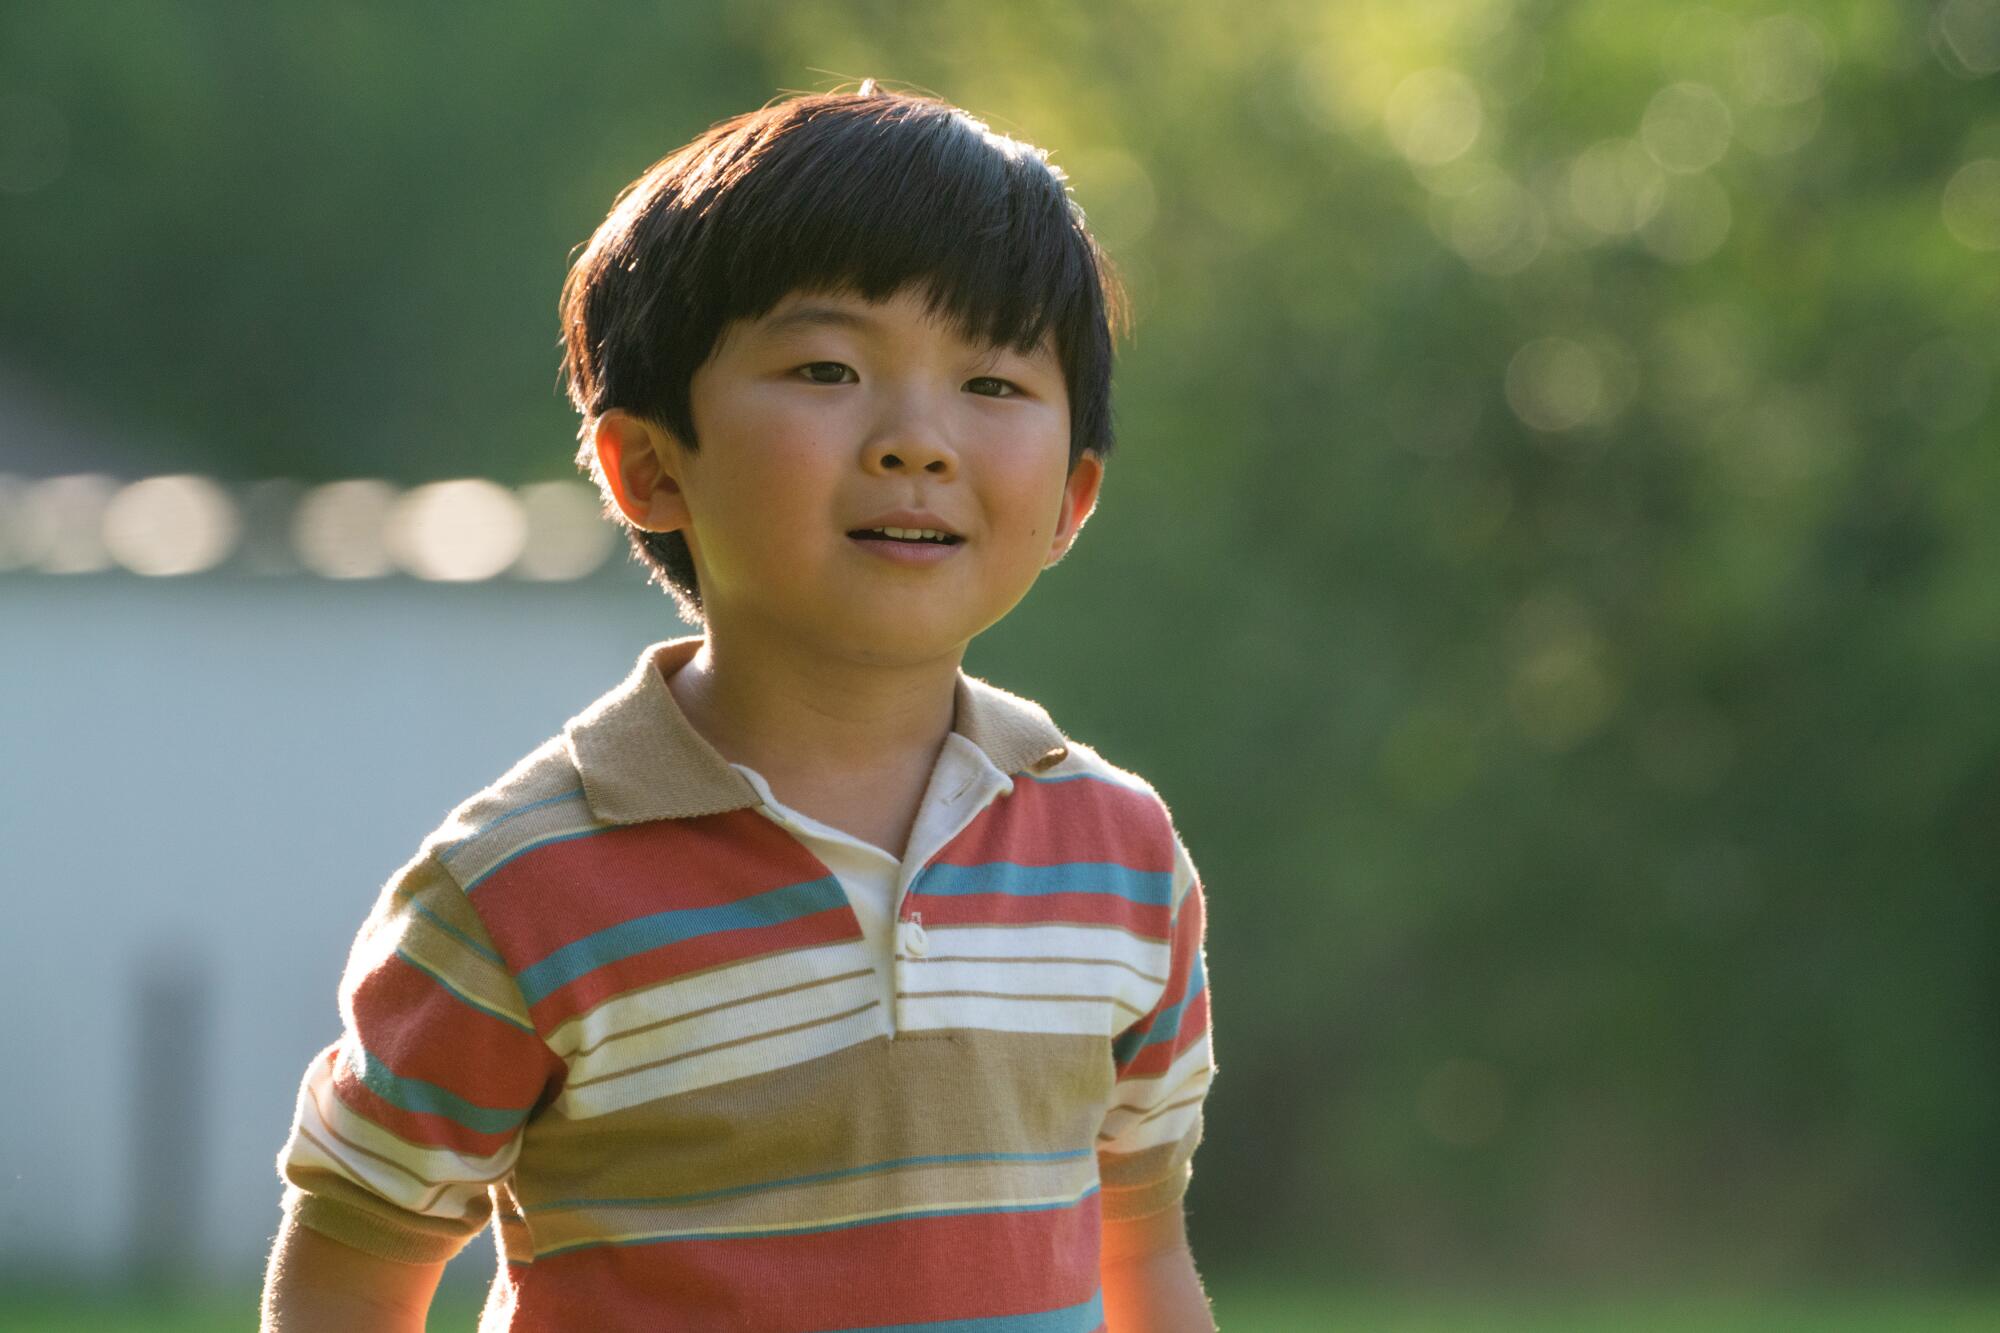 Alan Kim makes his movie debut in the Sundance prize-winning drama "Minari."